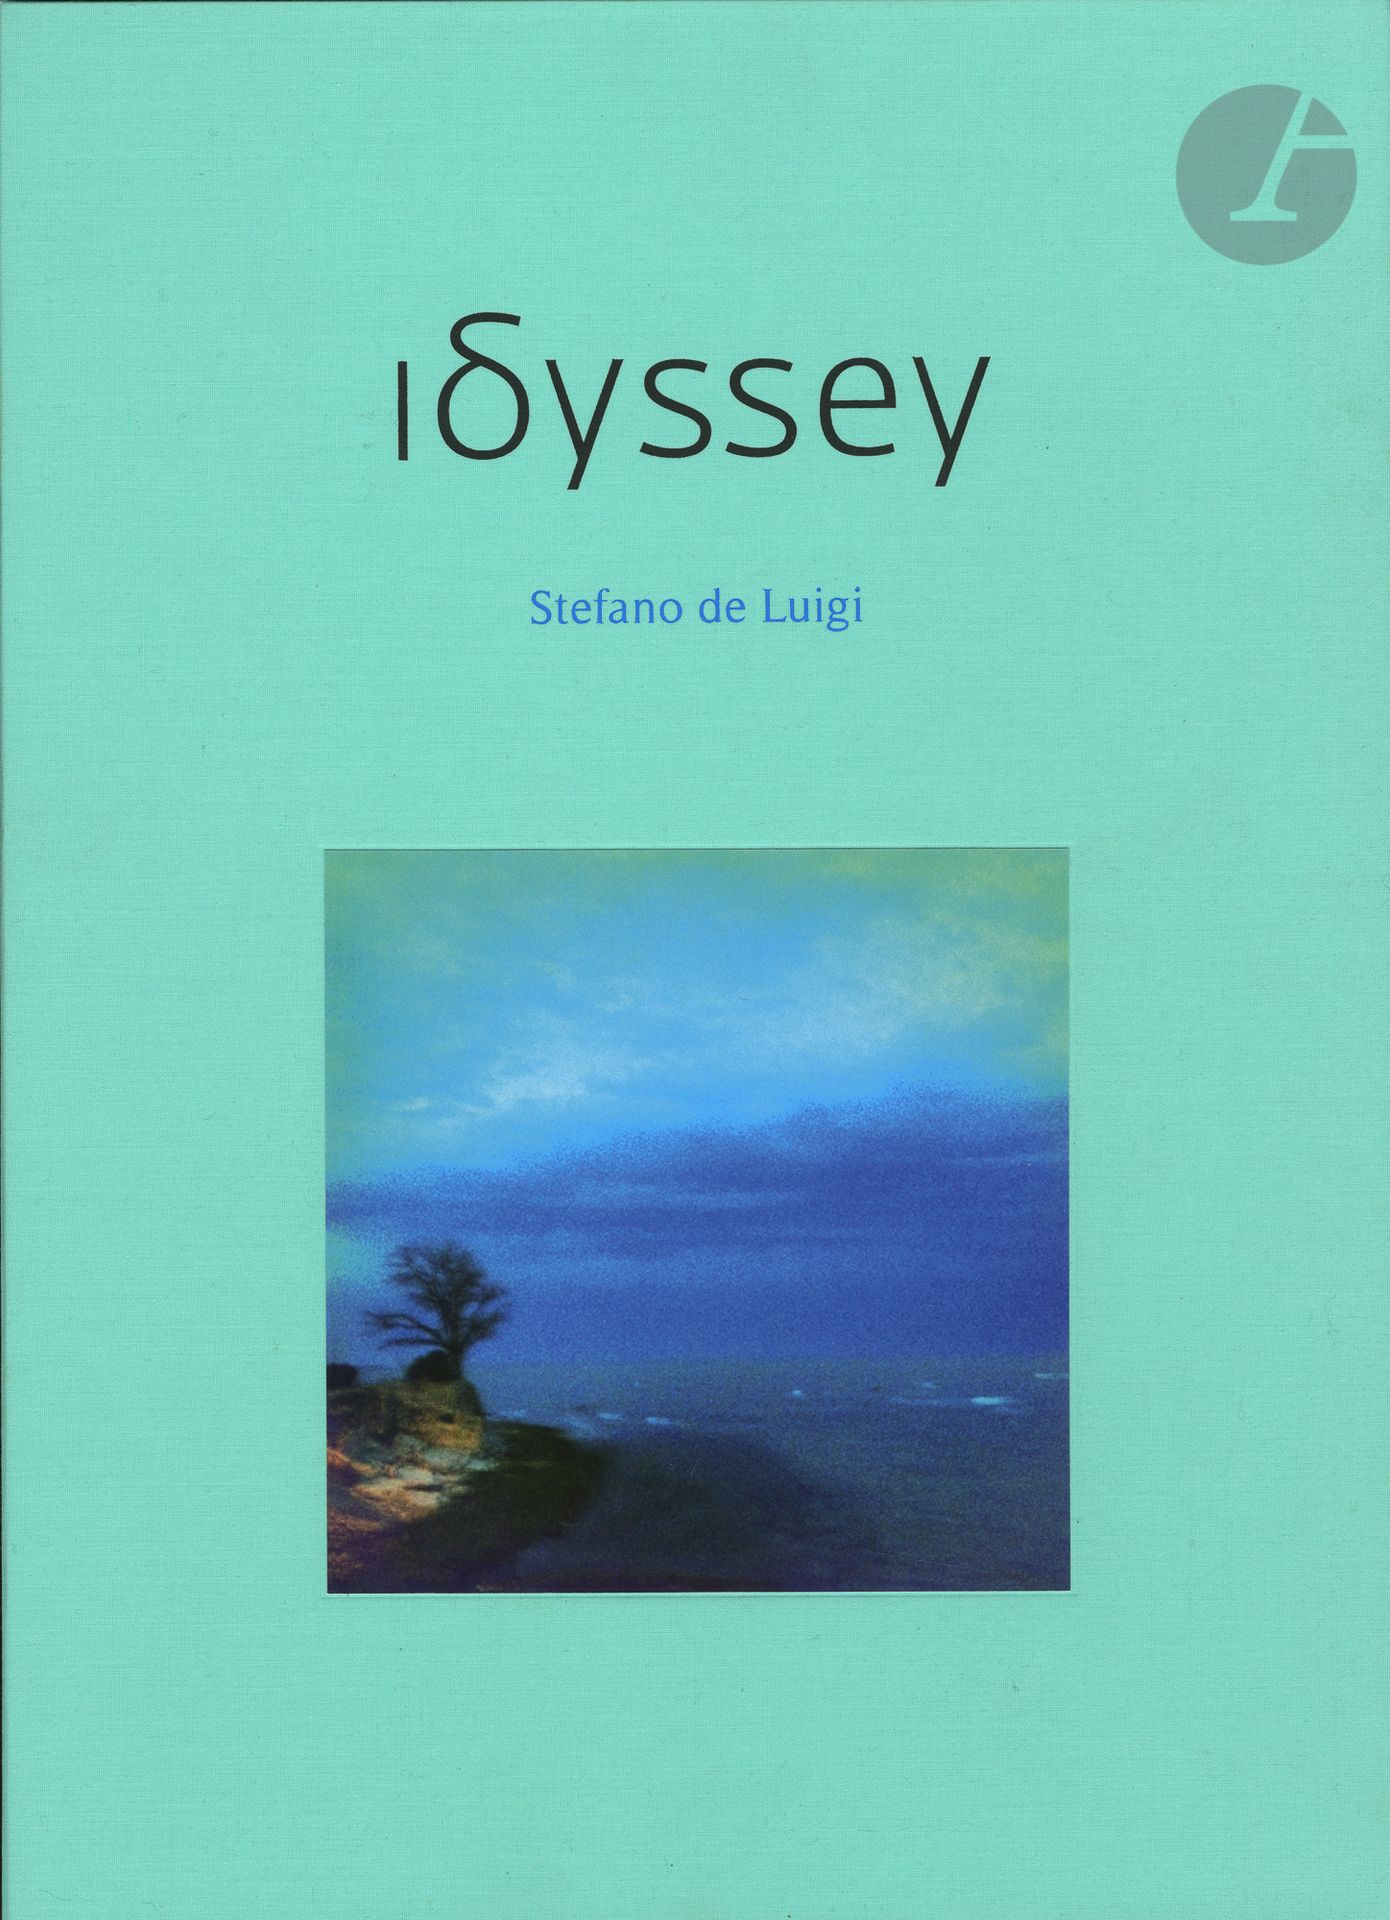 Null DE LUIGI, STEFANO (1964)
Idyssey.
贝萨德出版社，2017。
四开本（28.5 x 20.5厘米）。原创豪华版限量30&hellip;